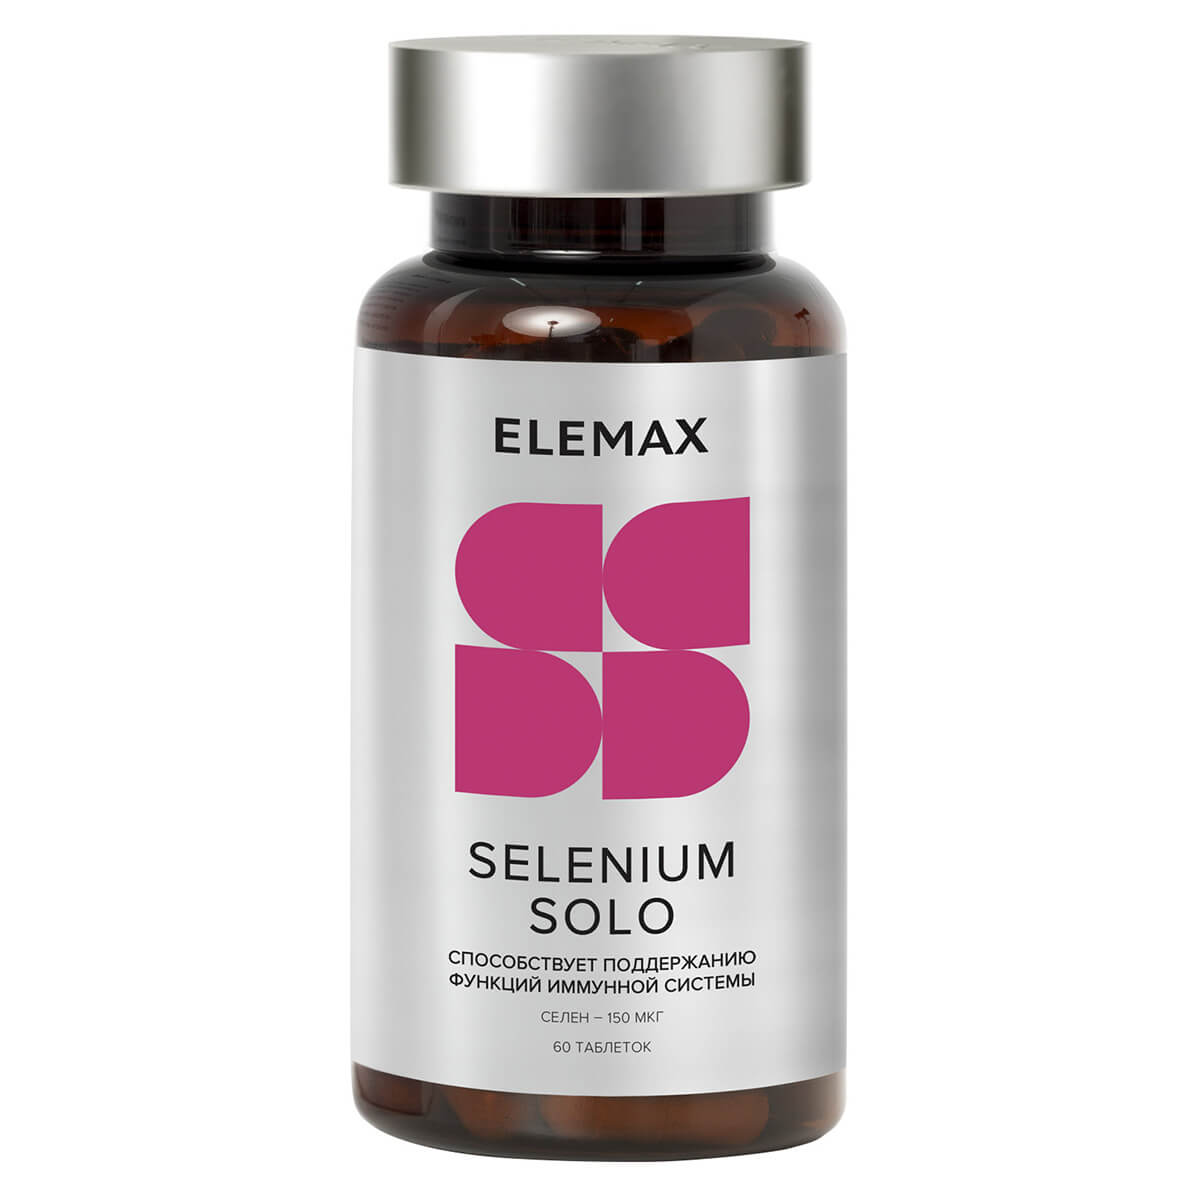 Биологически активная добавка к пище "Селен Соло", таблетки 60 шт массой 400 мг, Elemax - фото 1